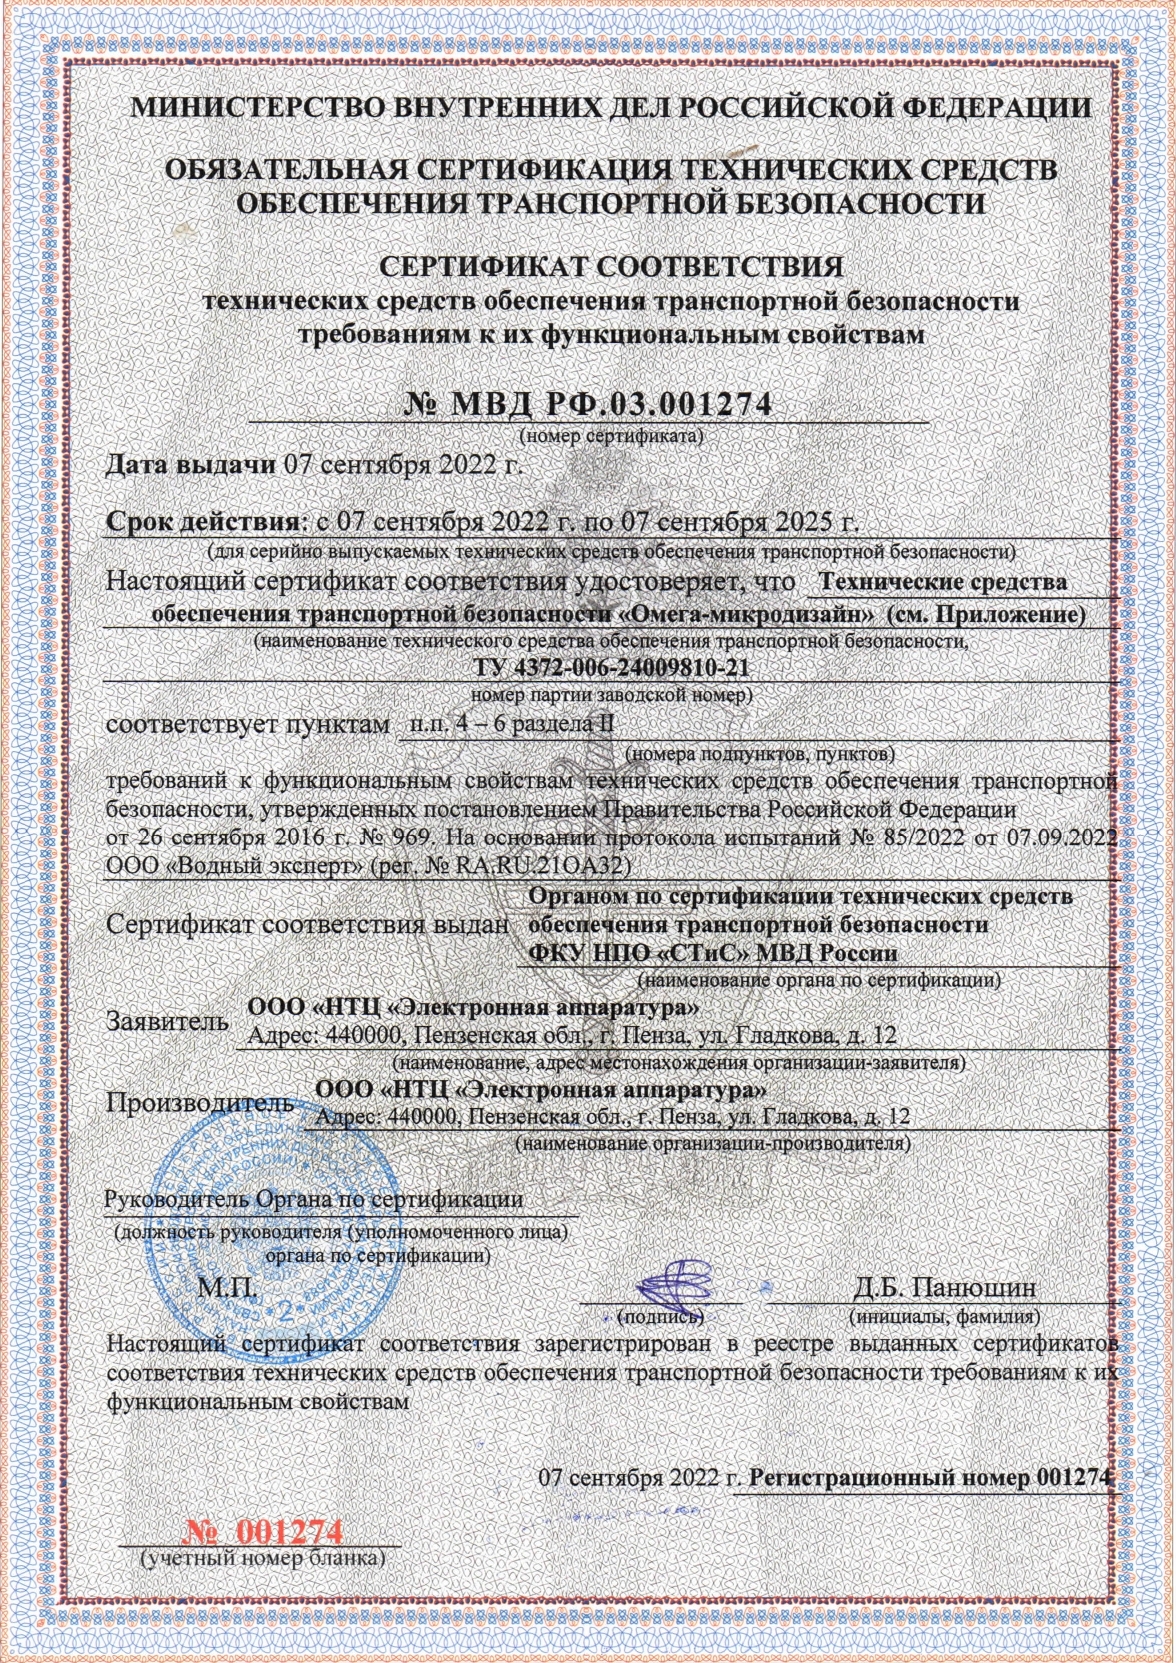 Сертификат транспортной безопасности ТСОТБ №001274 от 07.09.2022 ООО НТЦ Электронная аппаратура